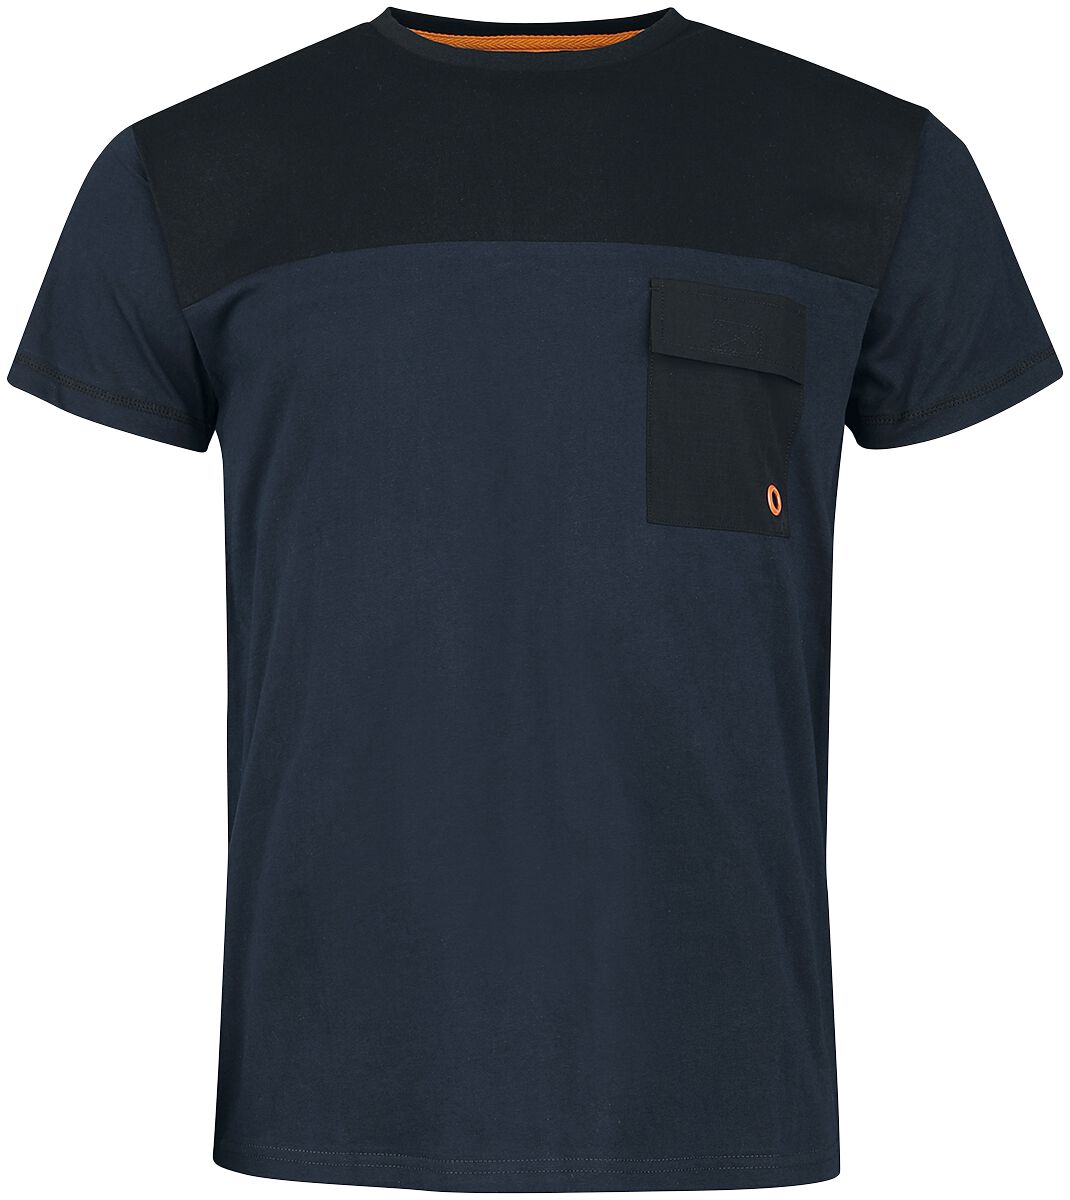 Counter-Strike Global Offensive - CS:GO T-Shirt blau in M